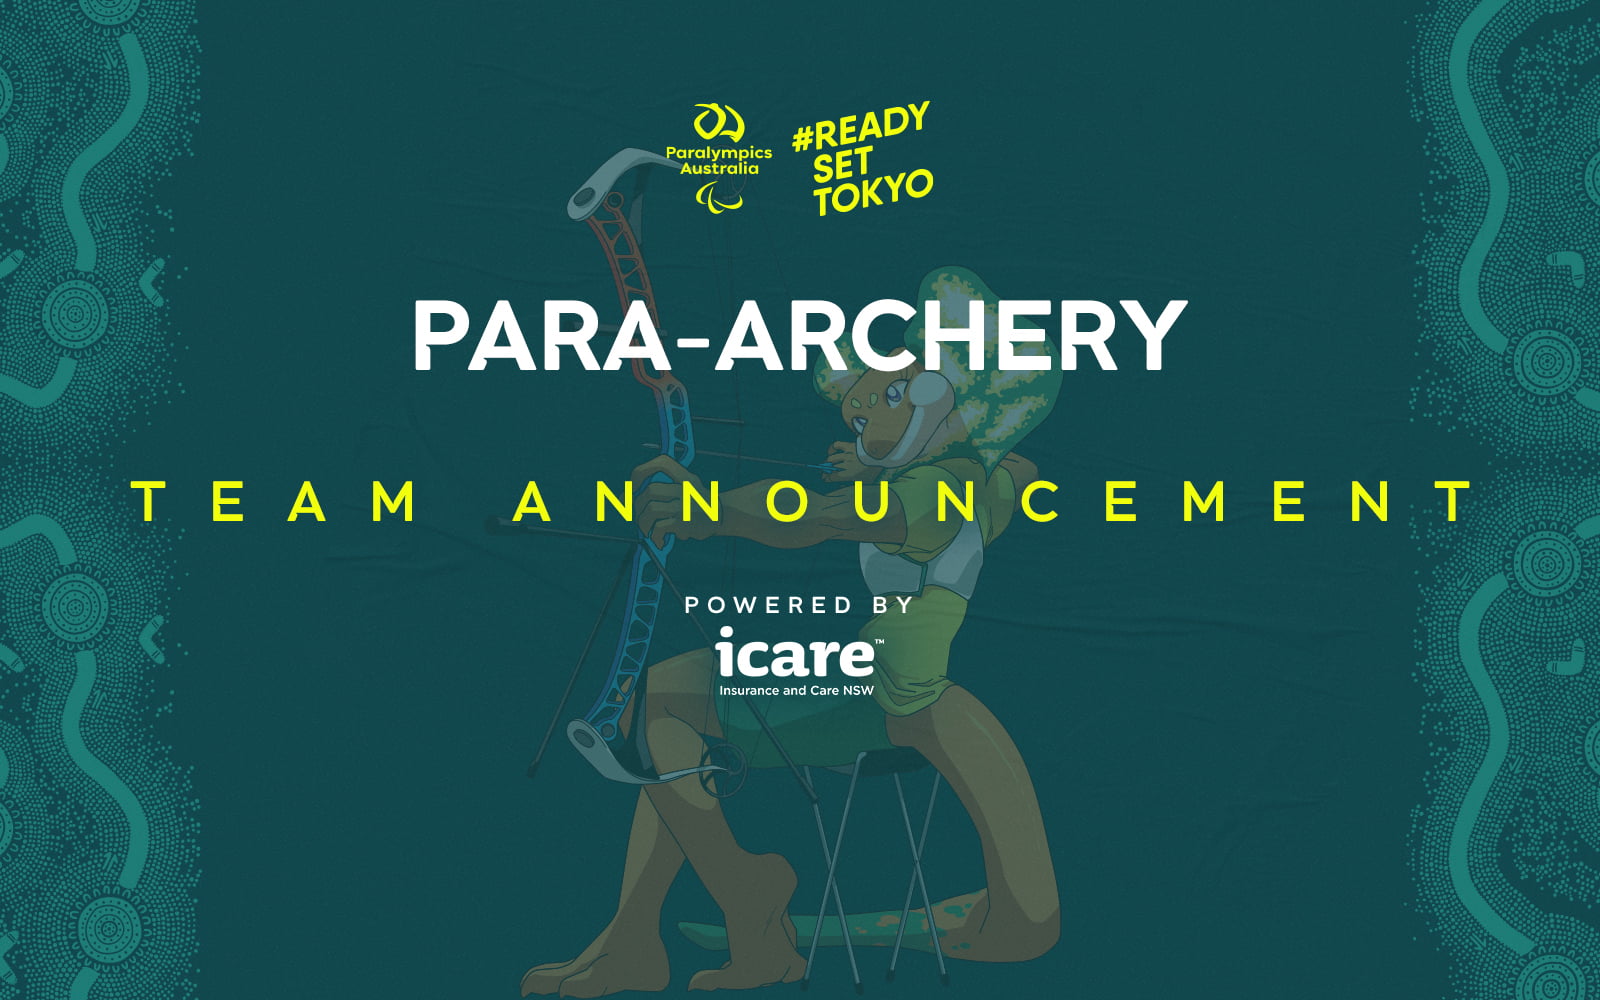 Australia’s Biggest Para-Archery Team Since Sydney Confirmed For Tokyo 2020